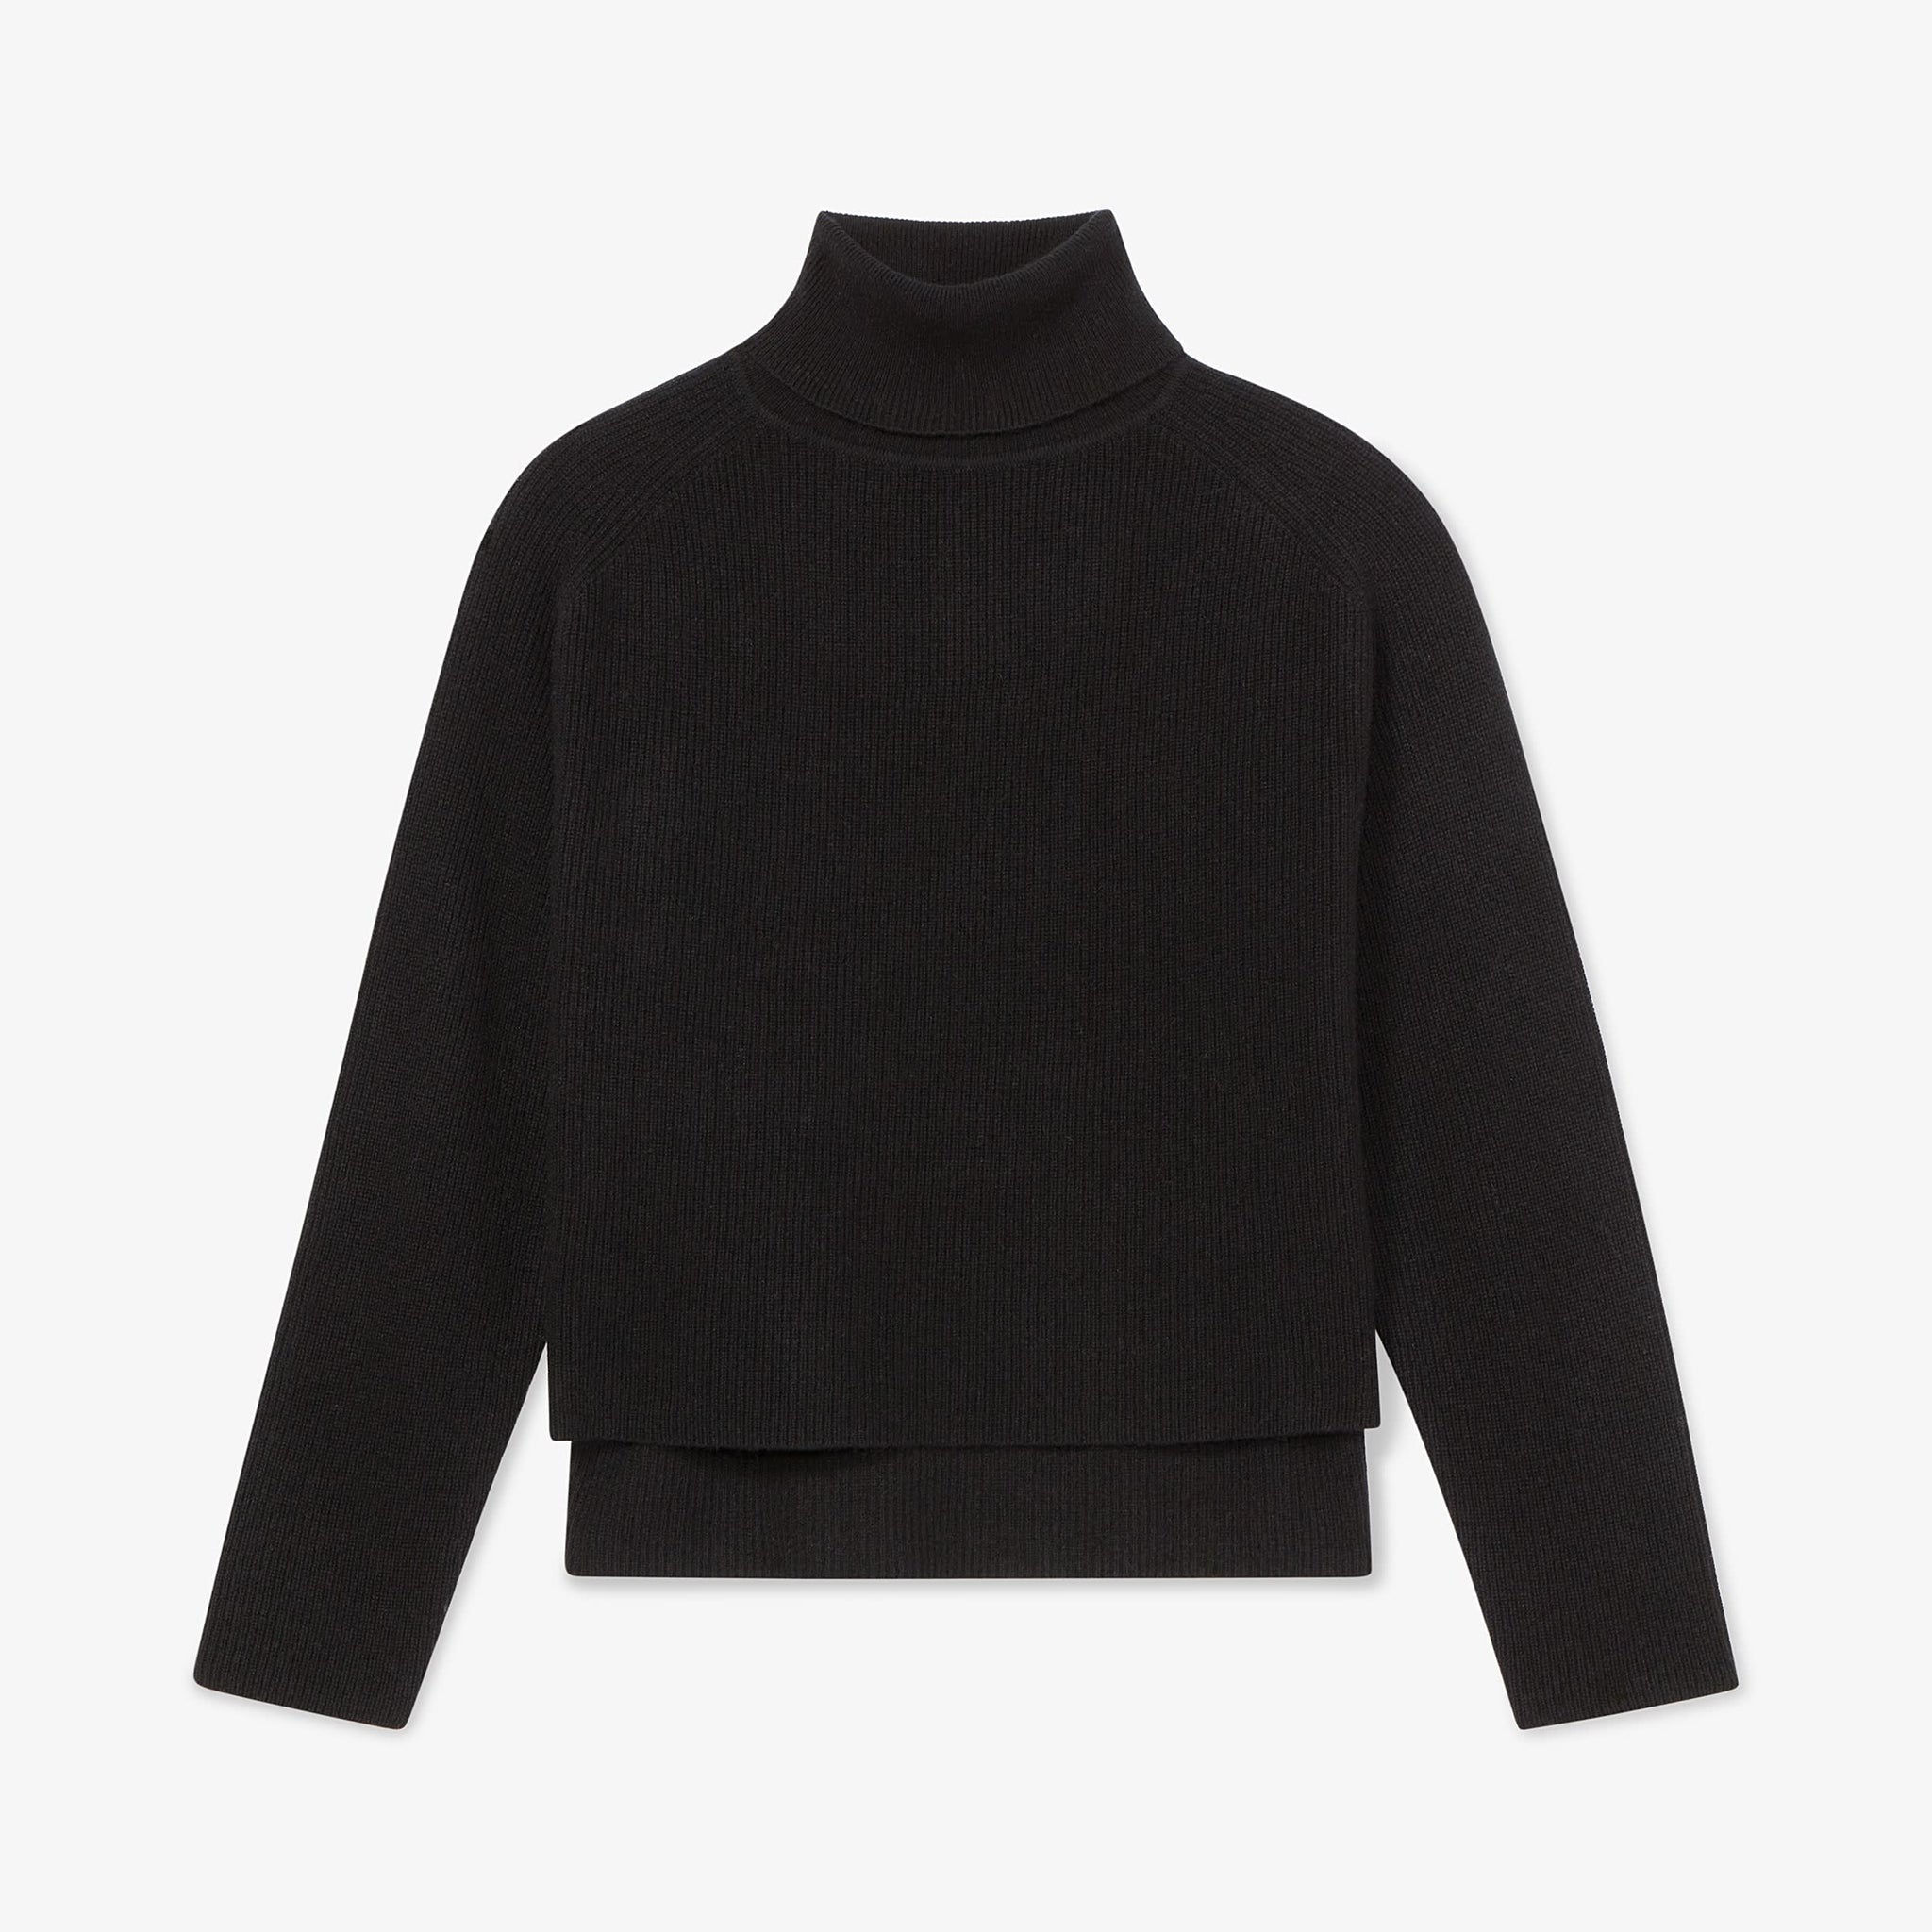 Packshot image of the Arbus Sweater in Black